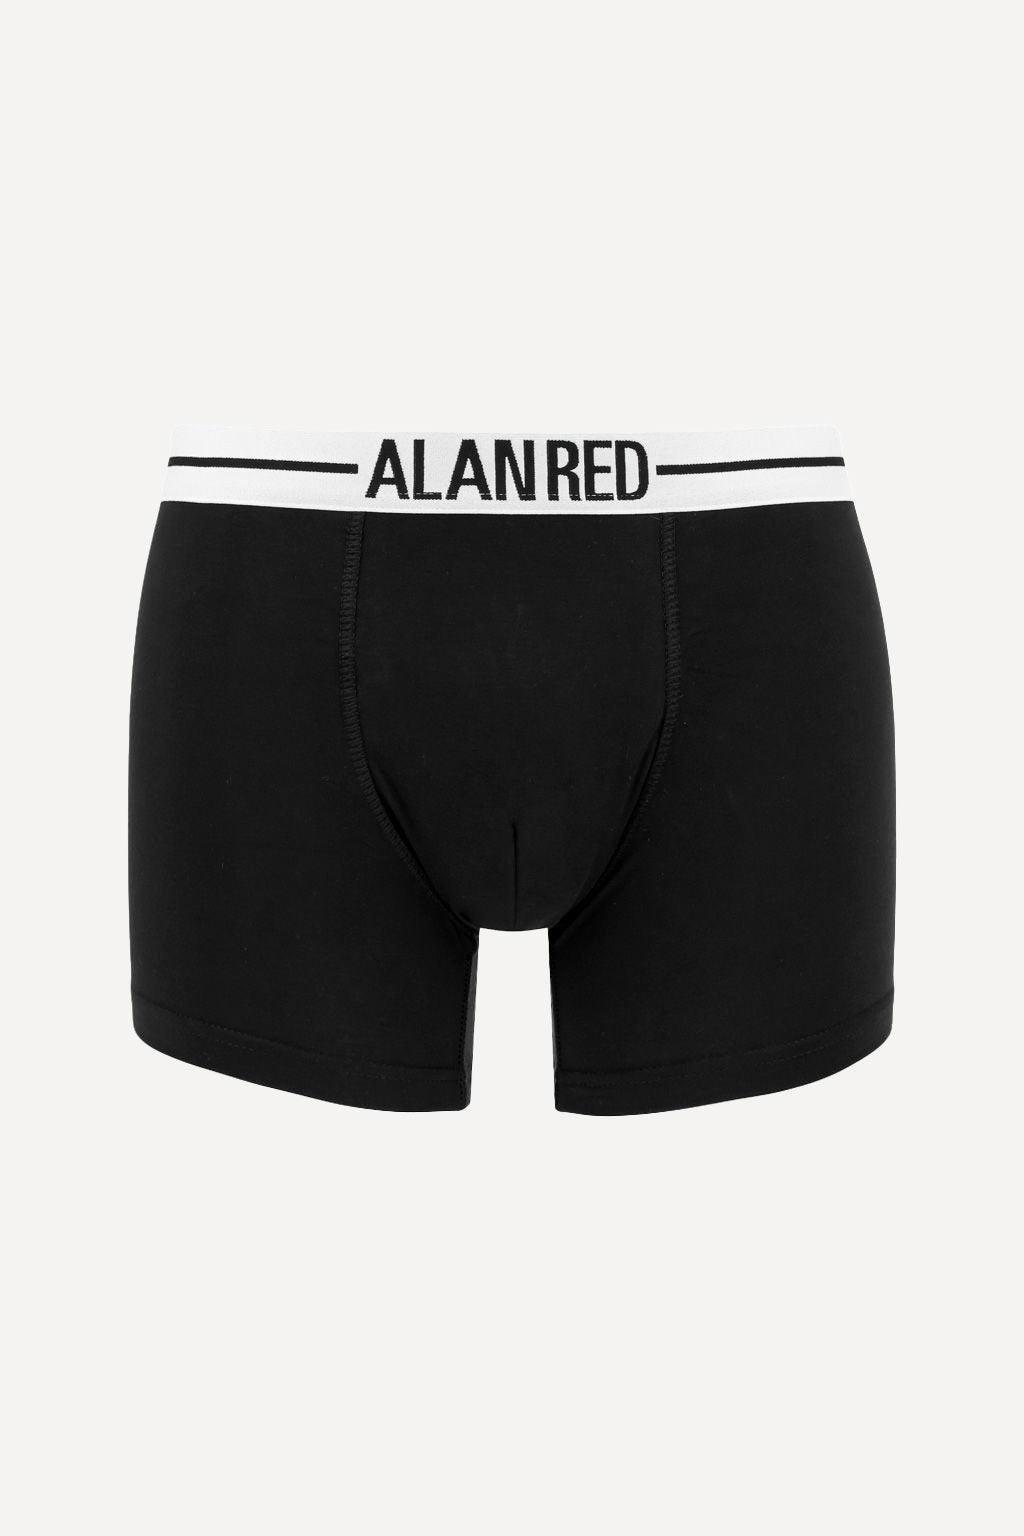 Alan Red underwear |  Big Boss | the menswear concept.